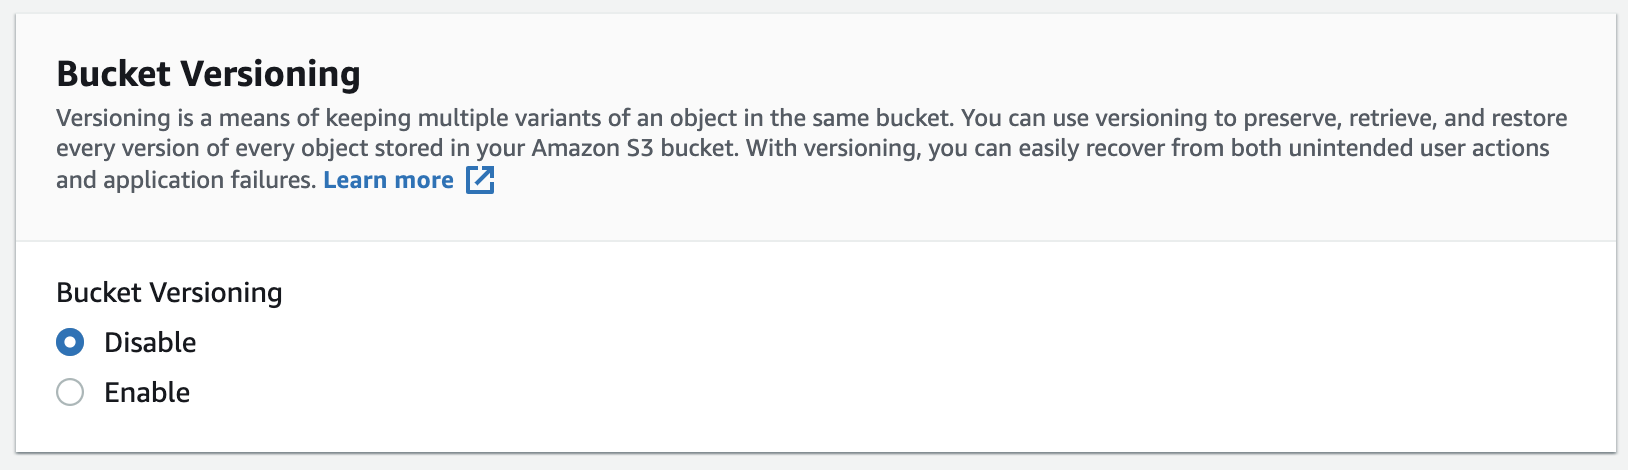 Bucket versioning settings